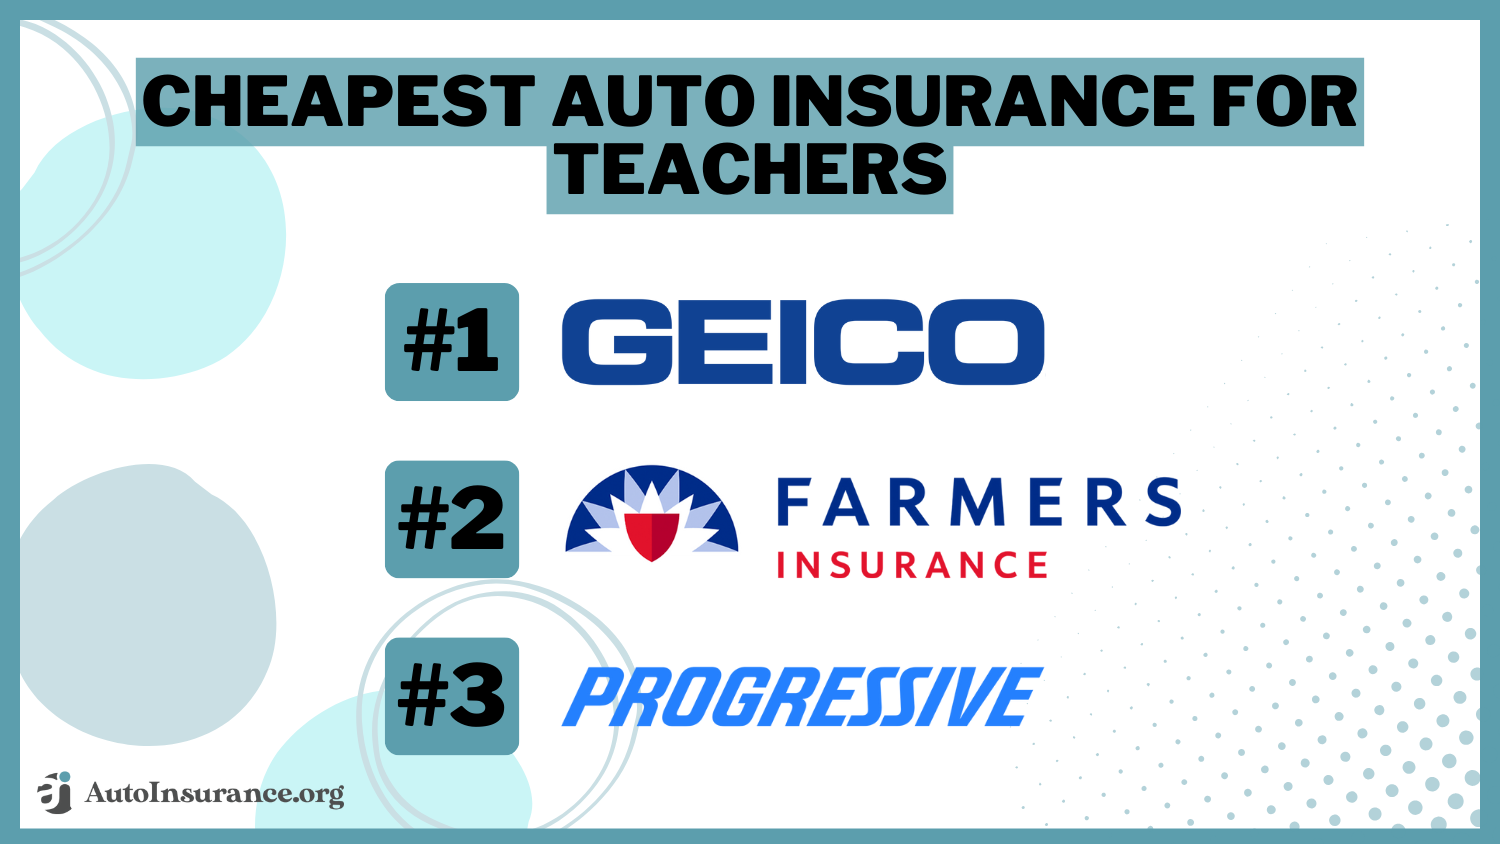 Cheapest Auto Insurance for Teachers: Geico, Farmers, and Progressive